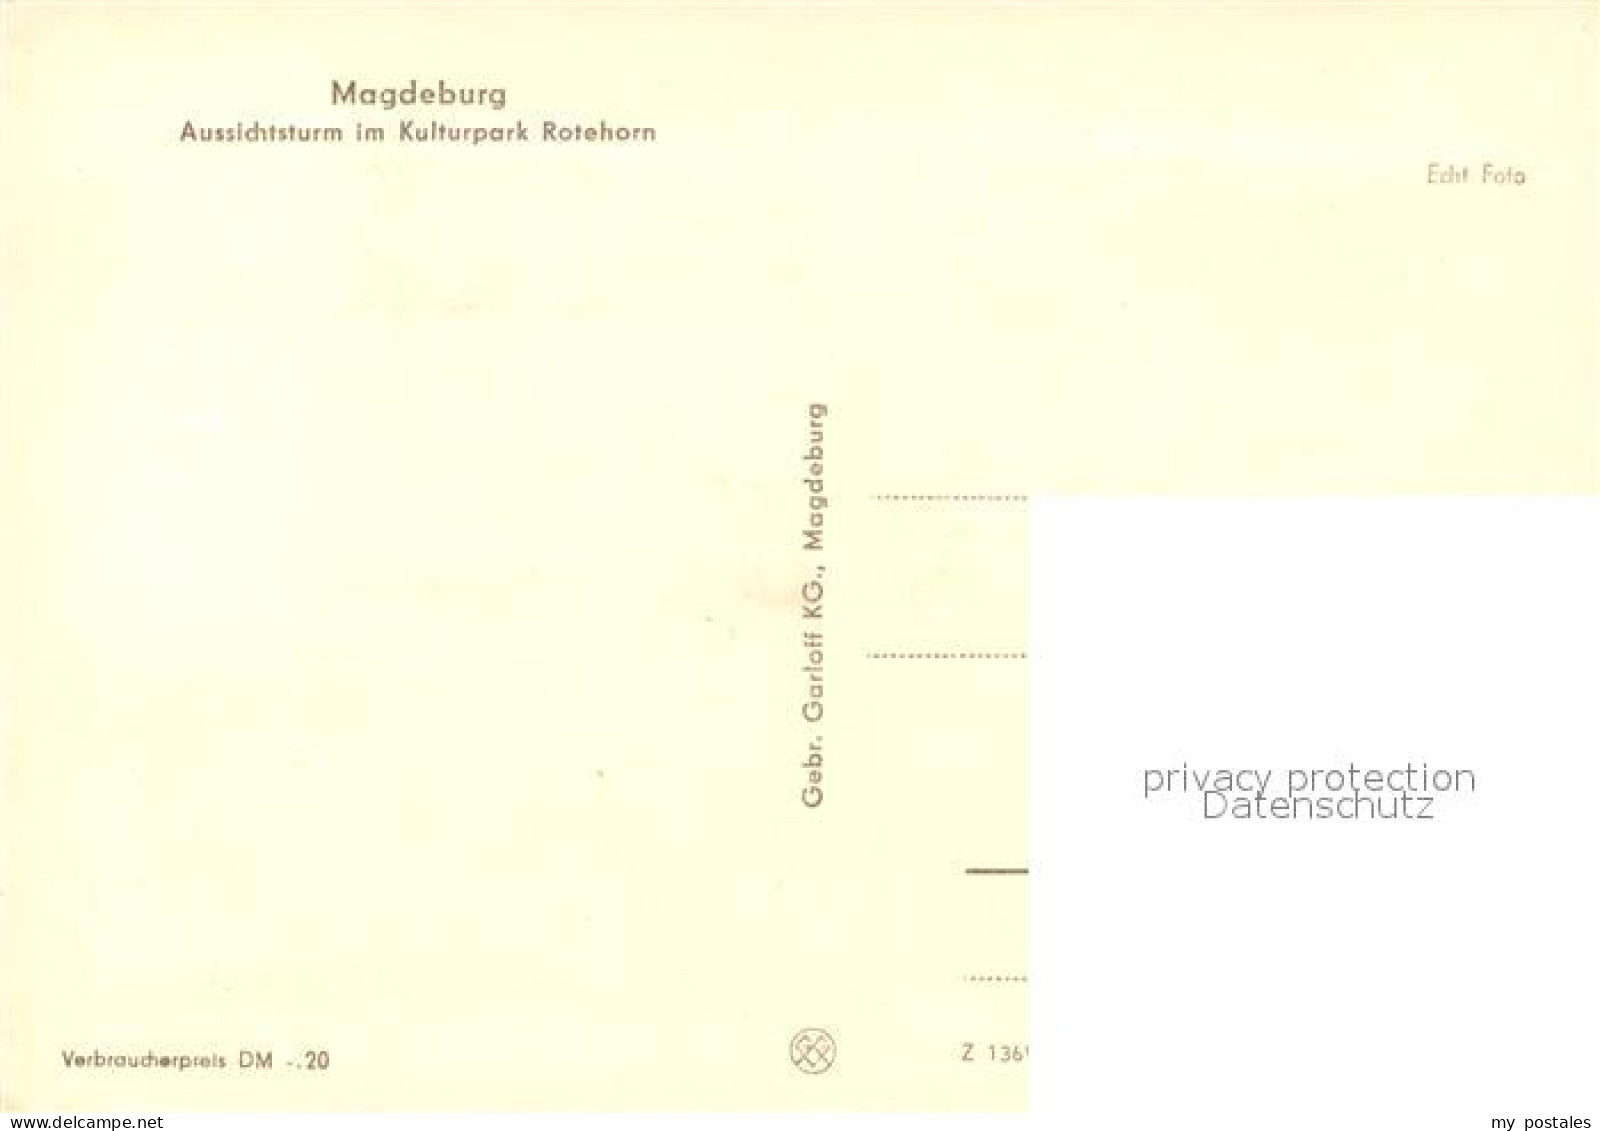 73297060 Magdeburg Aussichtsturm Kulturpark Rotehorn Magdeburg - Maagdenburg